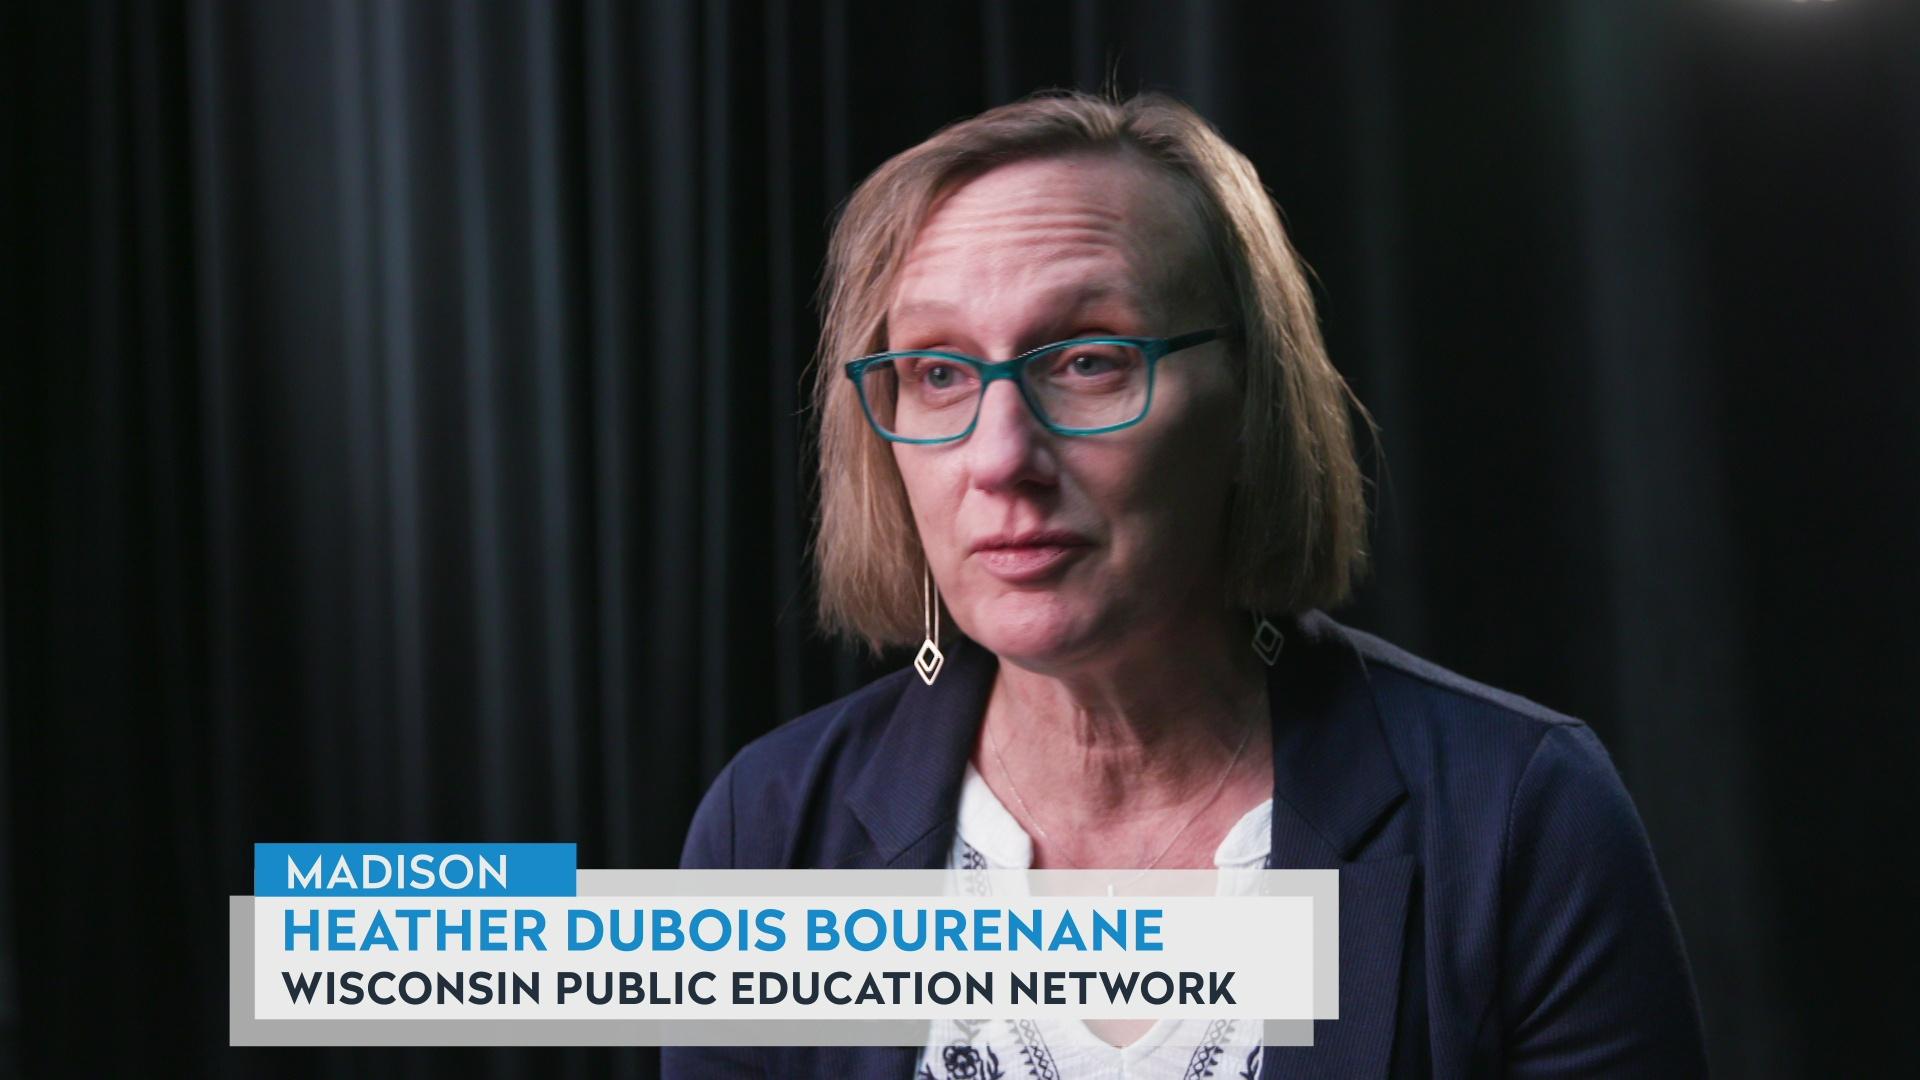 Heather DuBois Bourenane on funding schools with referendums